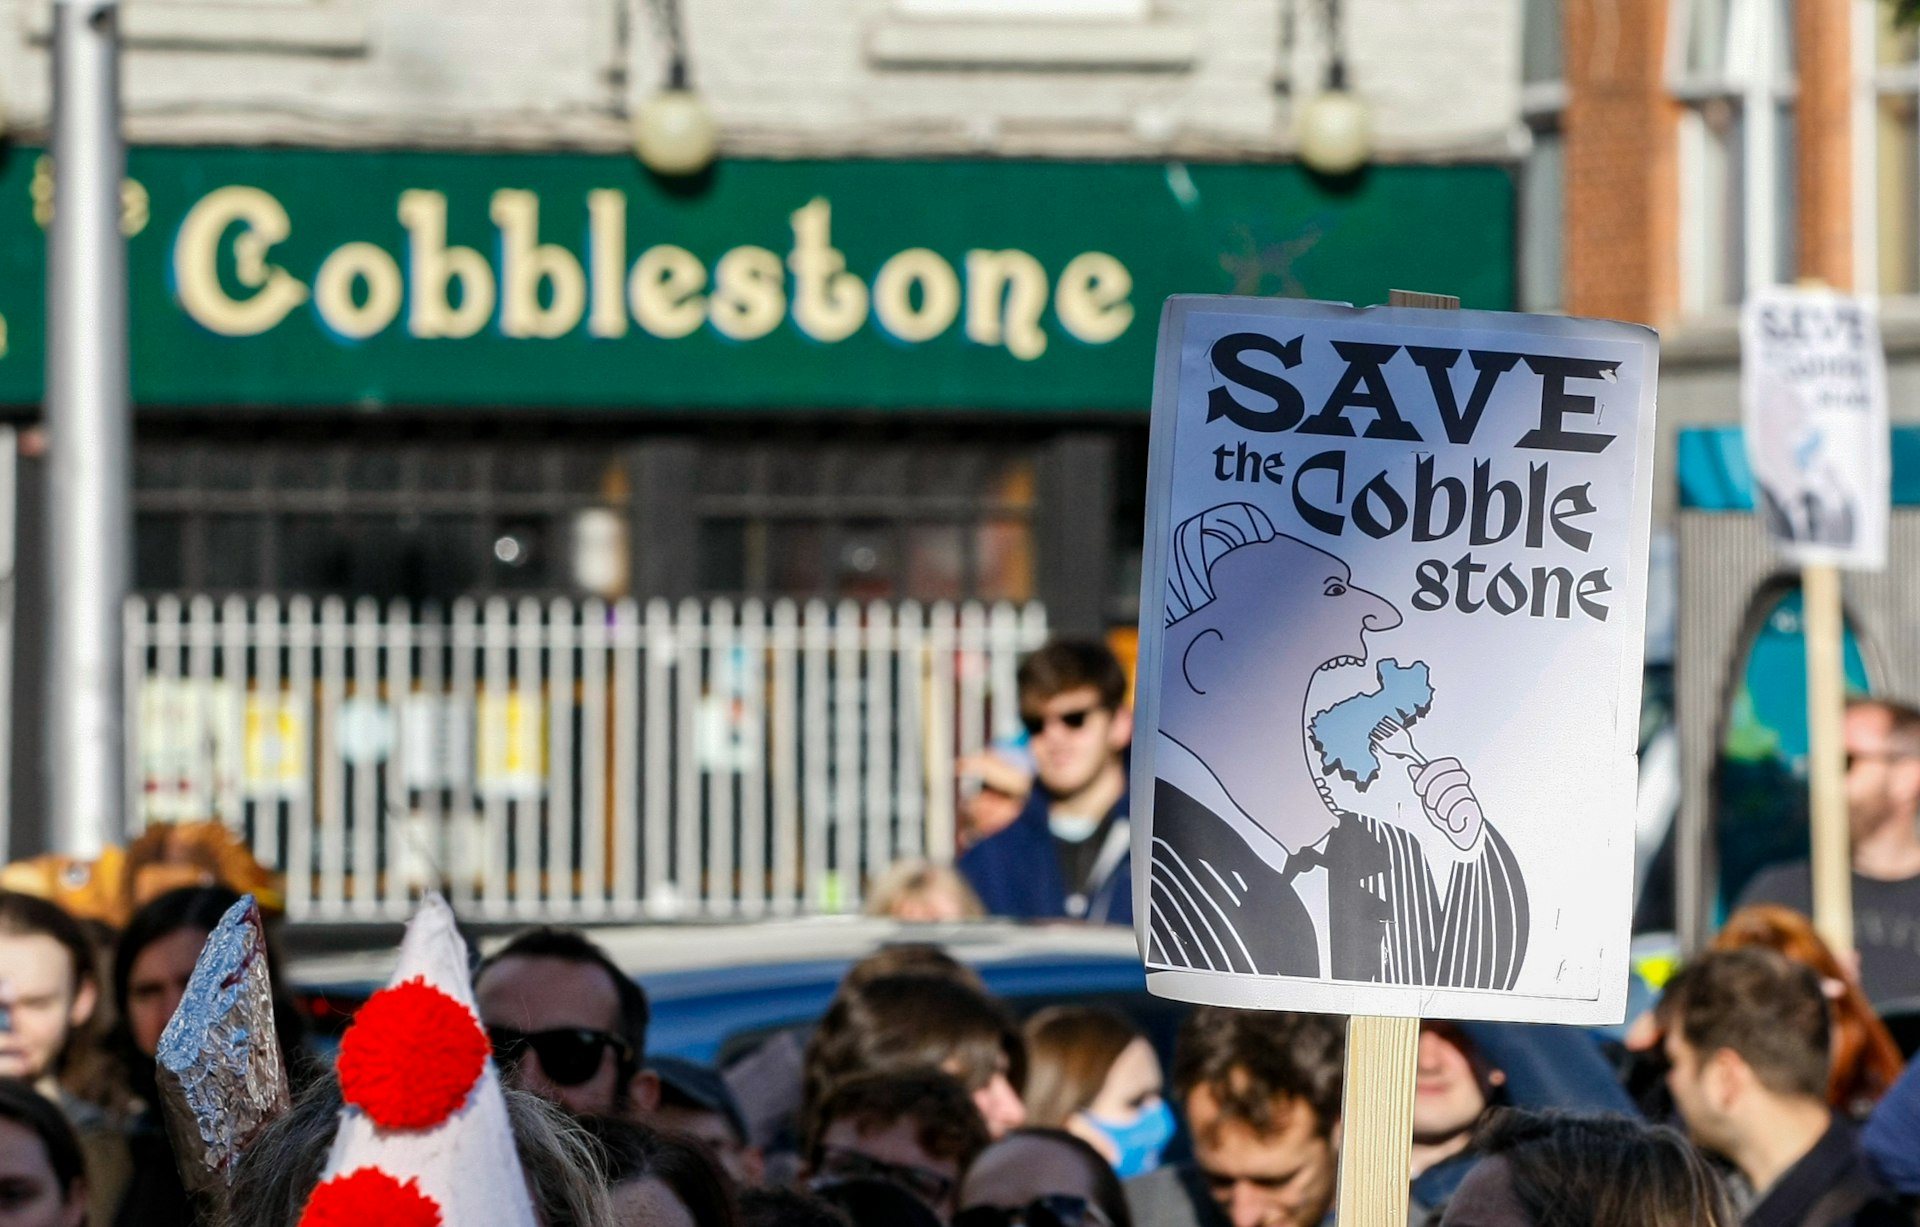 Save the Cobblestone demonstration